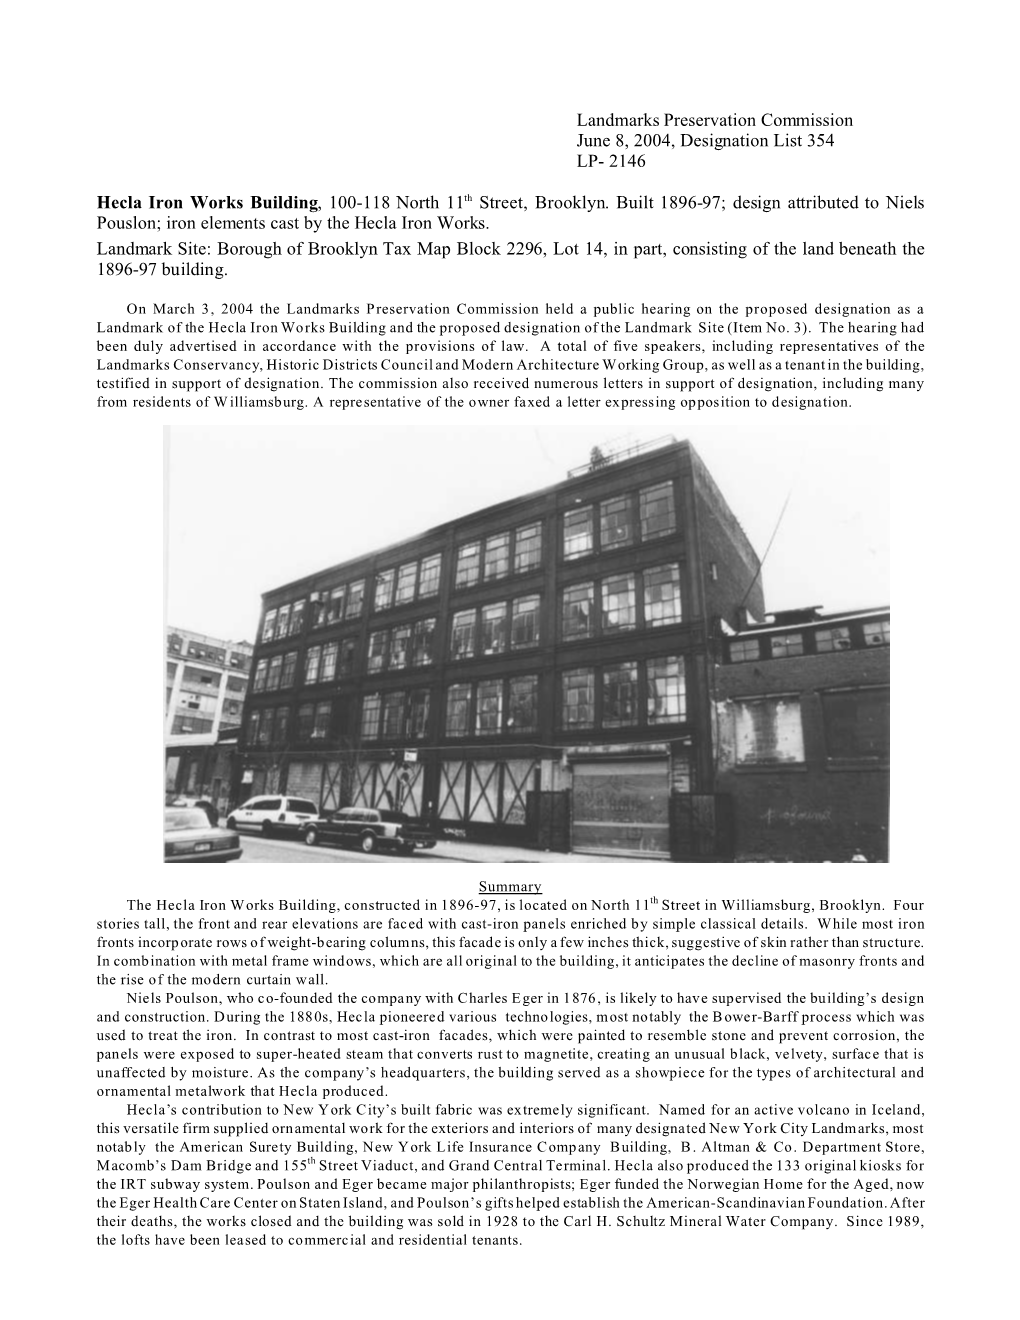 Hecla Iron Works Individual Landmark Designation Report